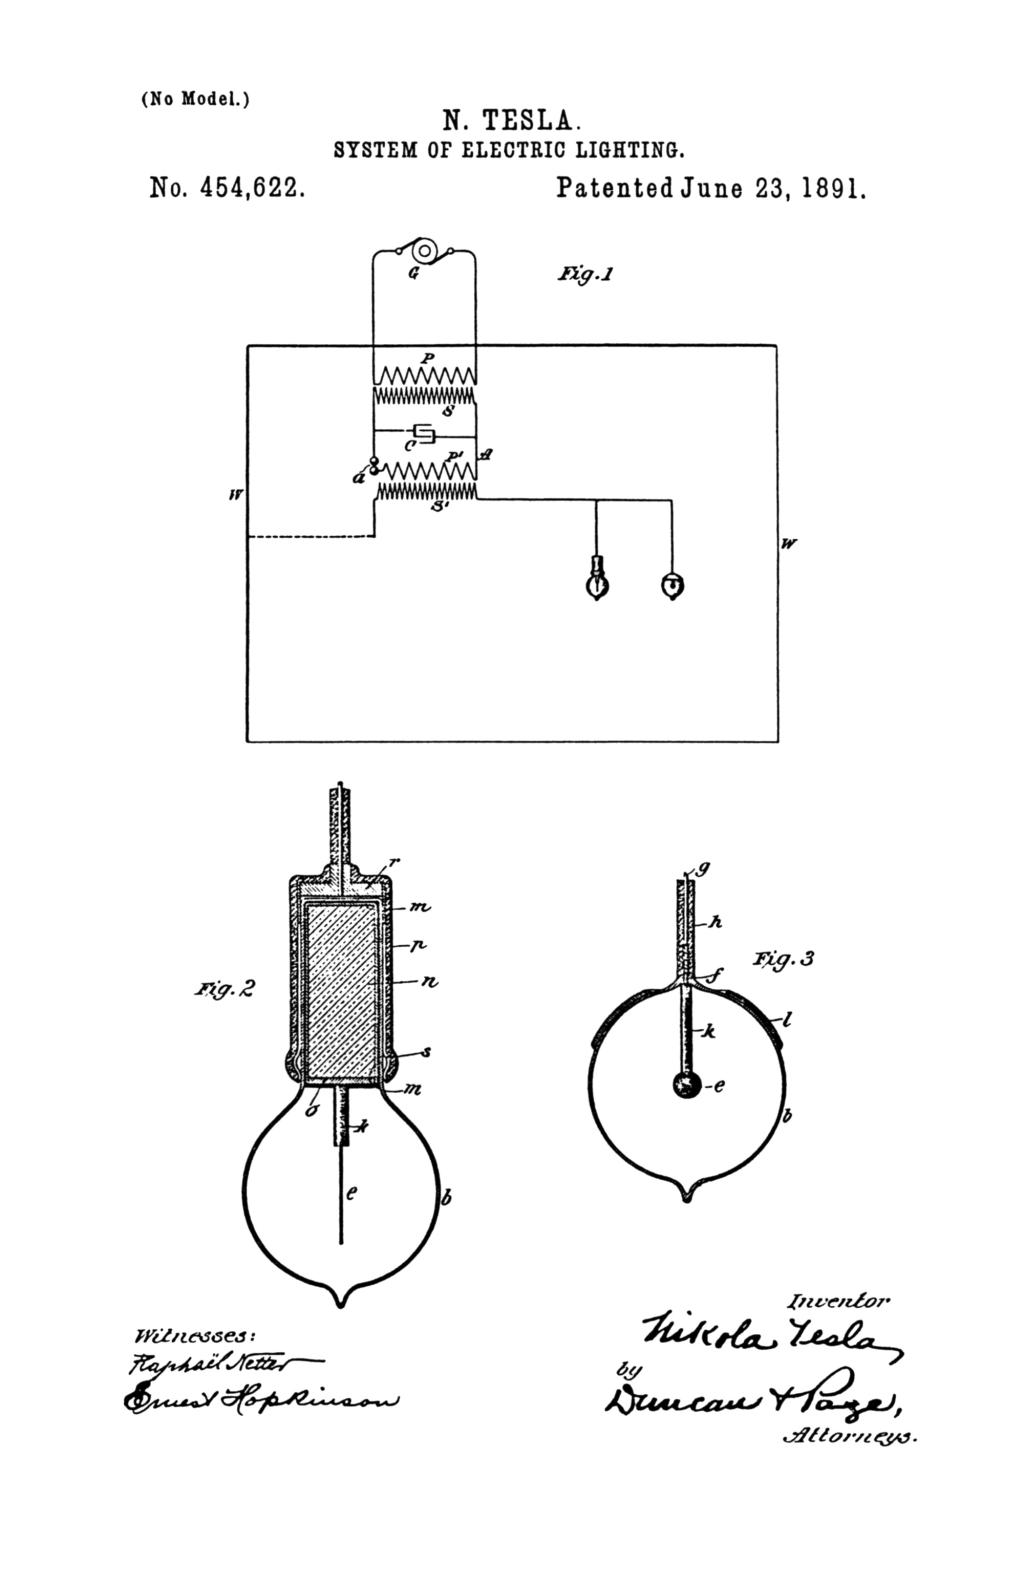 Nikola Tesla U.S. Patent 454,622 - System of Electric Lighting - Image 1